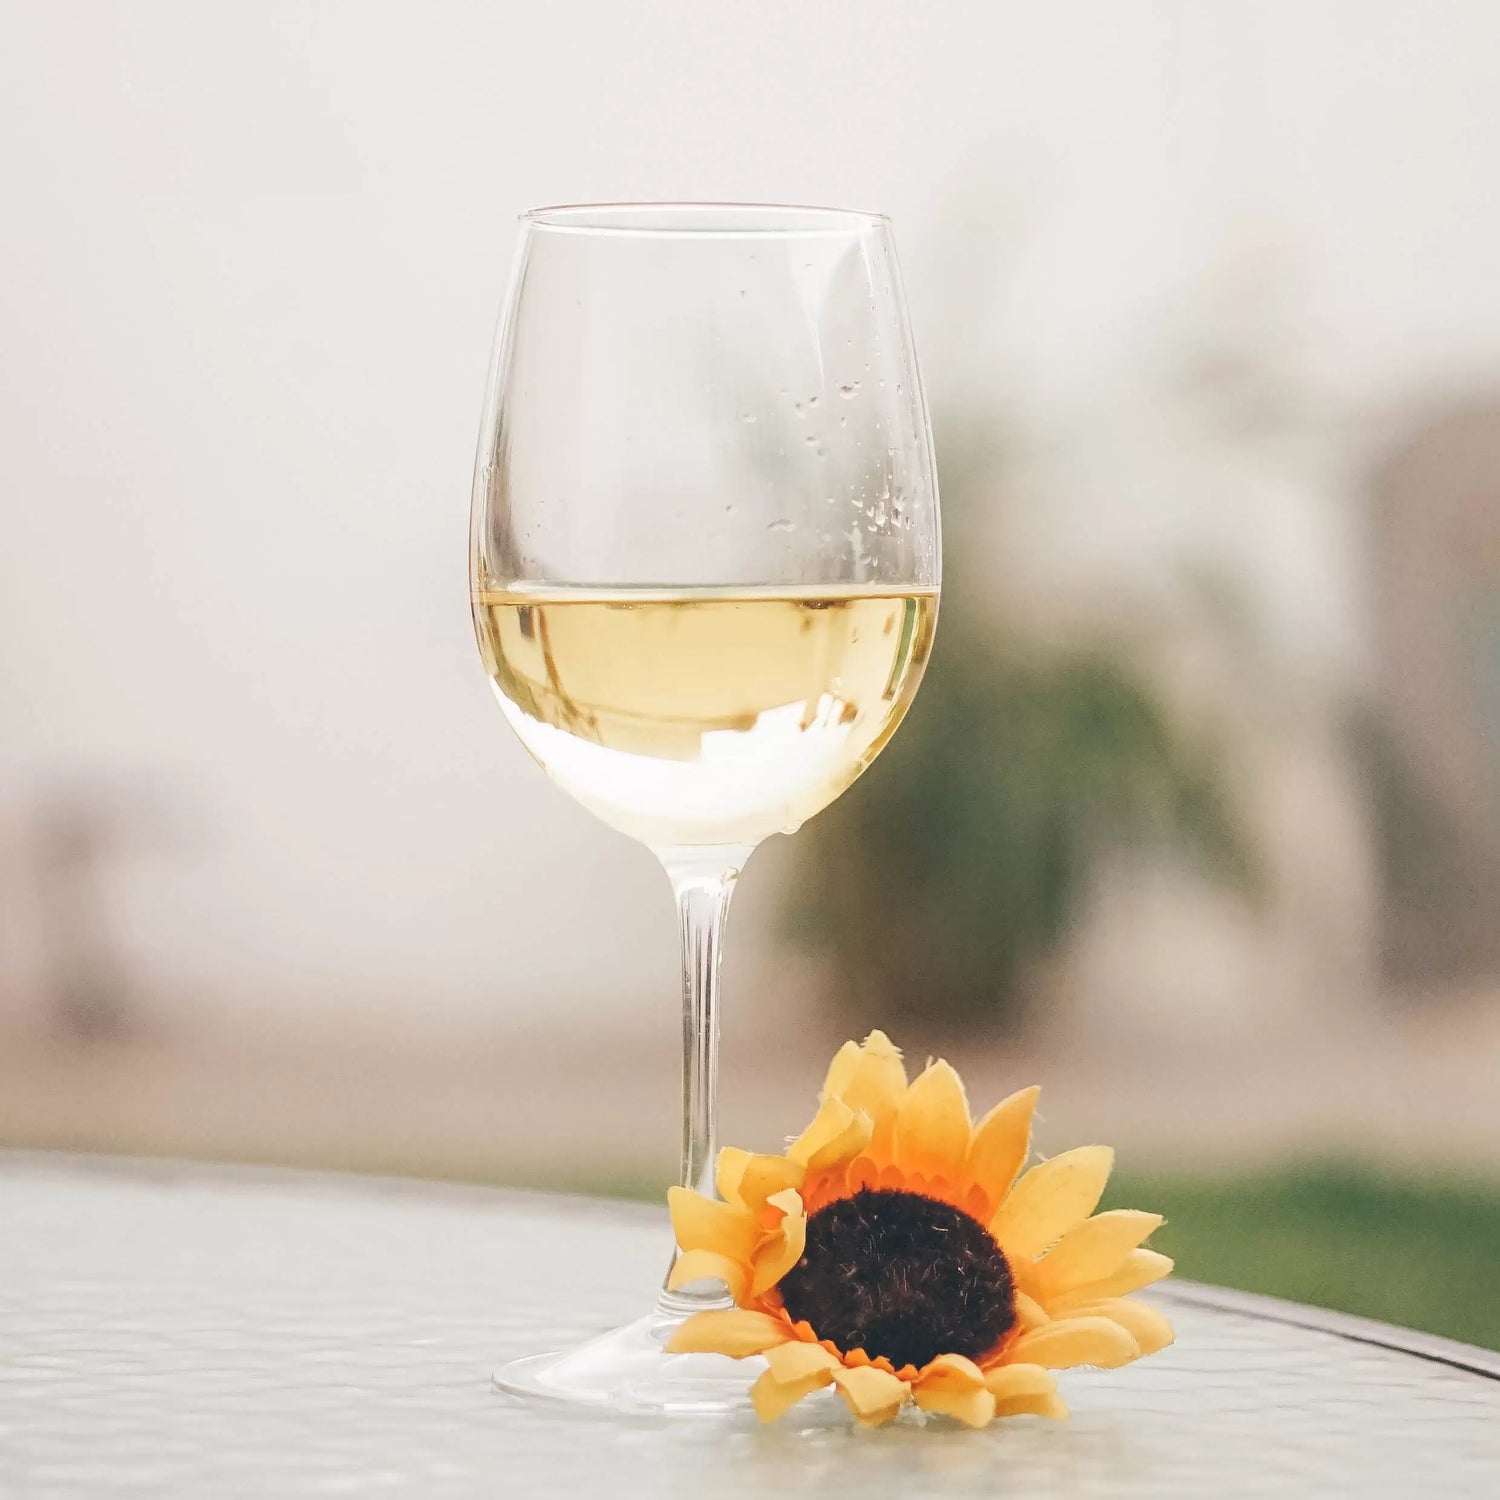 A glass of chardonnay wine near a flower